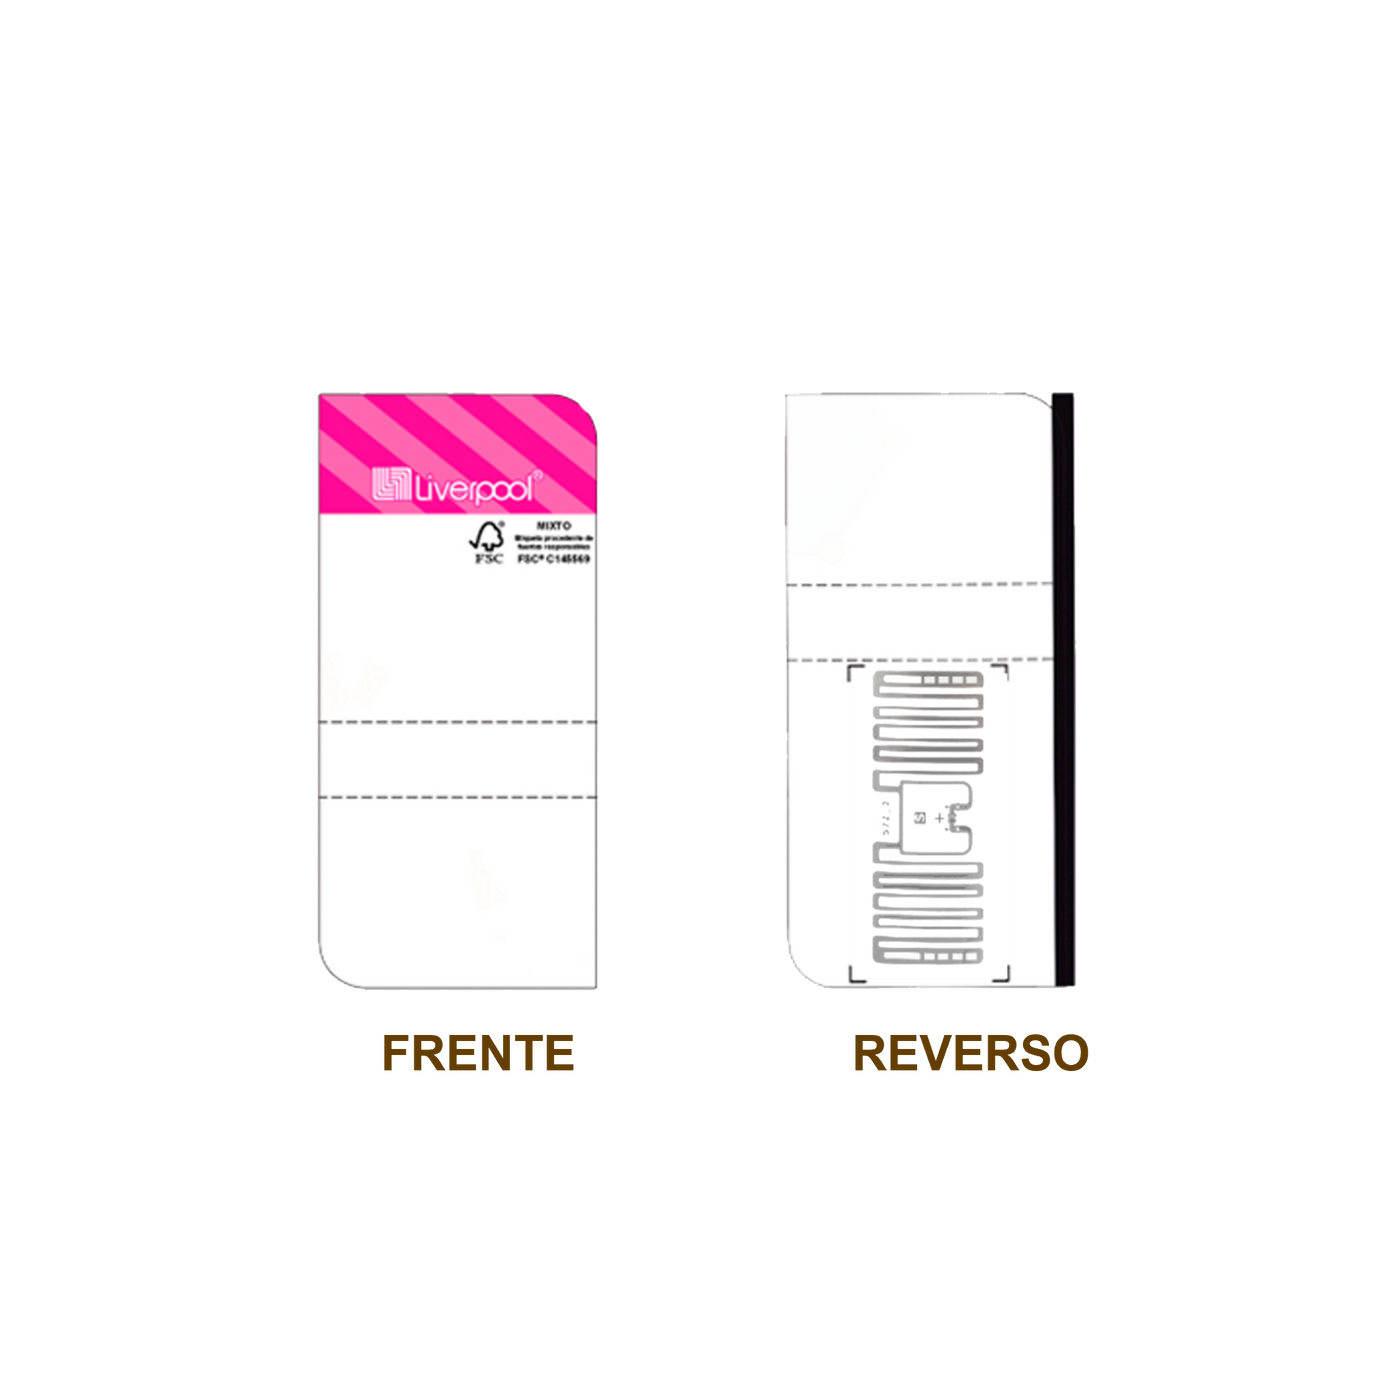 20 Millares de Etiqueta RFID TTR  adherible blanca con impresión rosa 79mm x 37 mm con inlay, Miniweb M730 Avery Dennison, Clase 1 Gen 2, UHF 860-960 Mhz, EPC 128 Bit